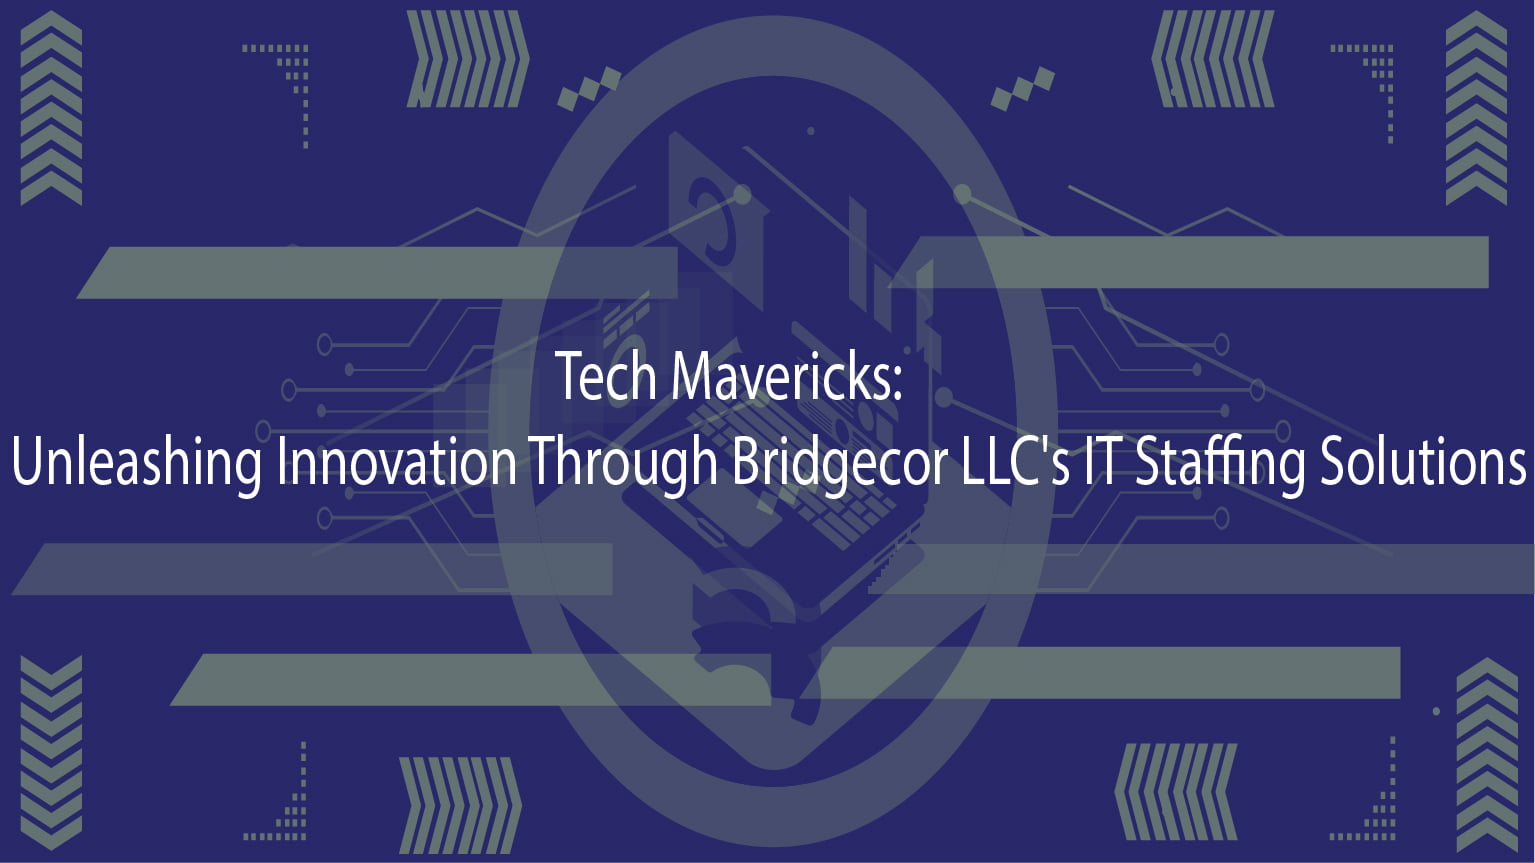 Tech Mavericks: Unleashing Innovation Through BridgeCor LLC's IT Staffing Solutions